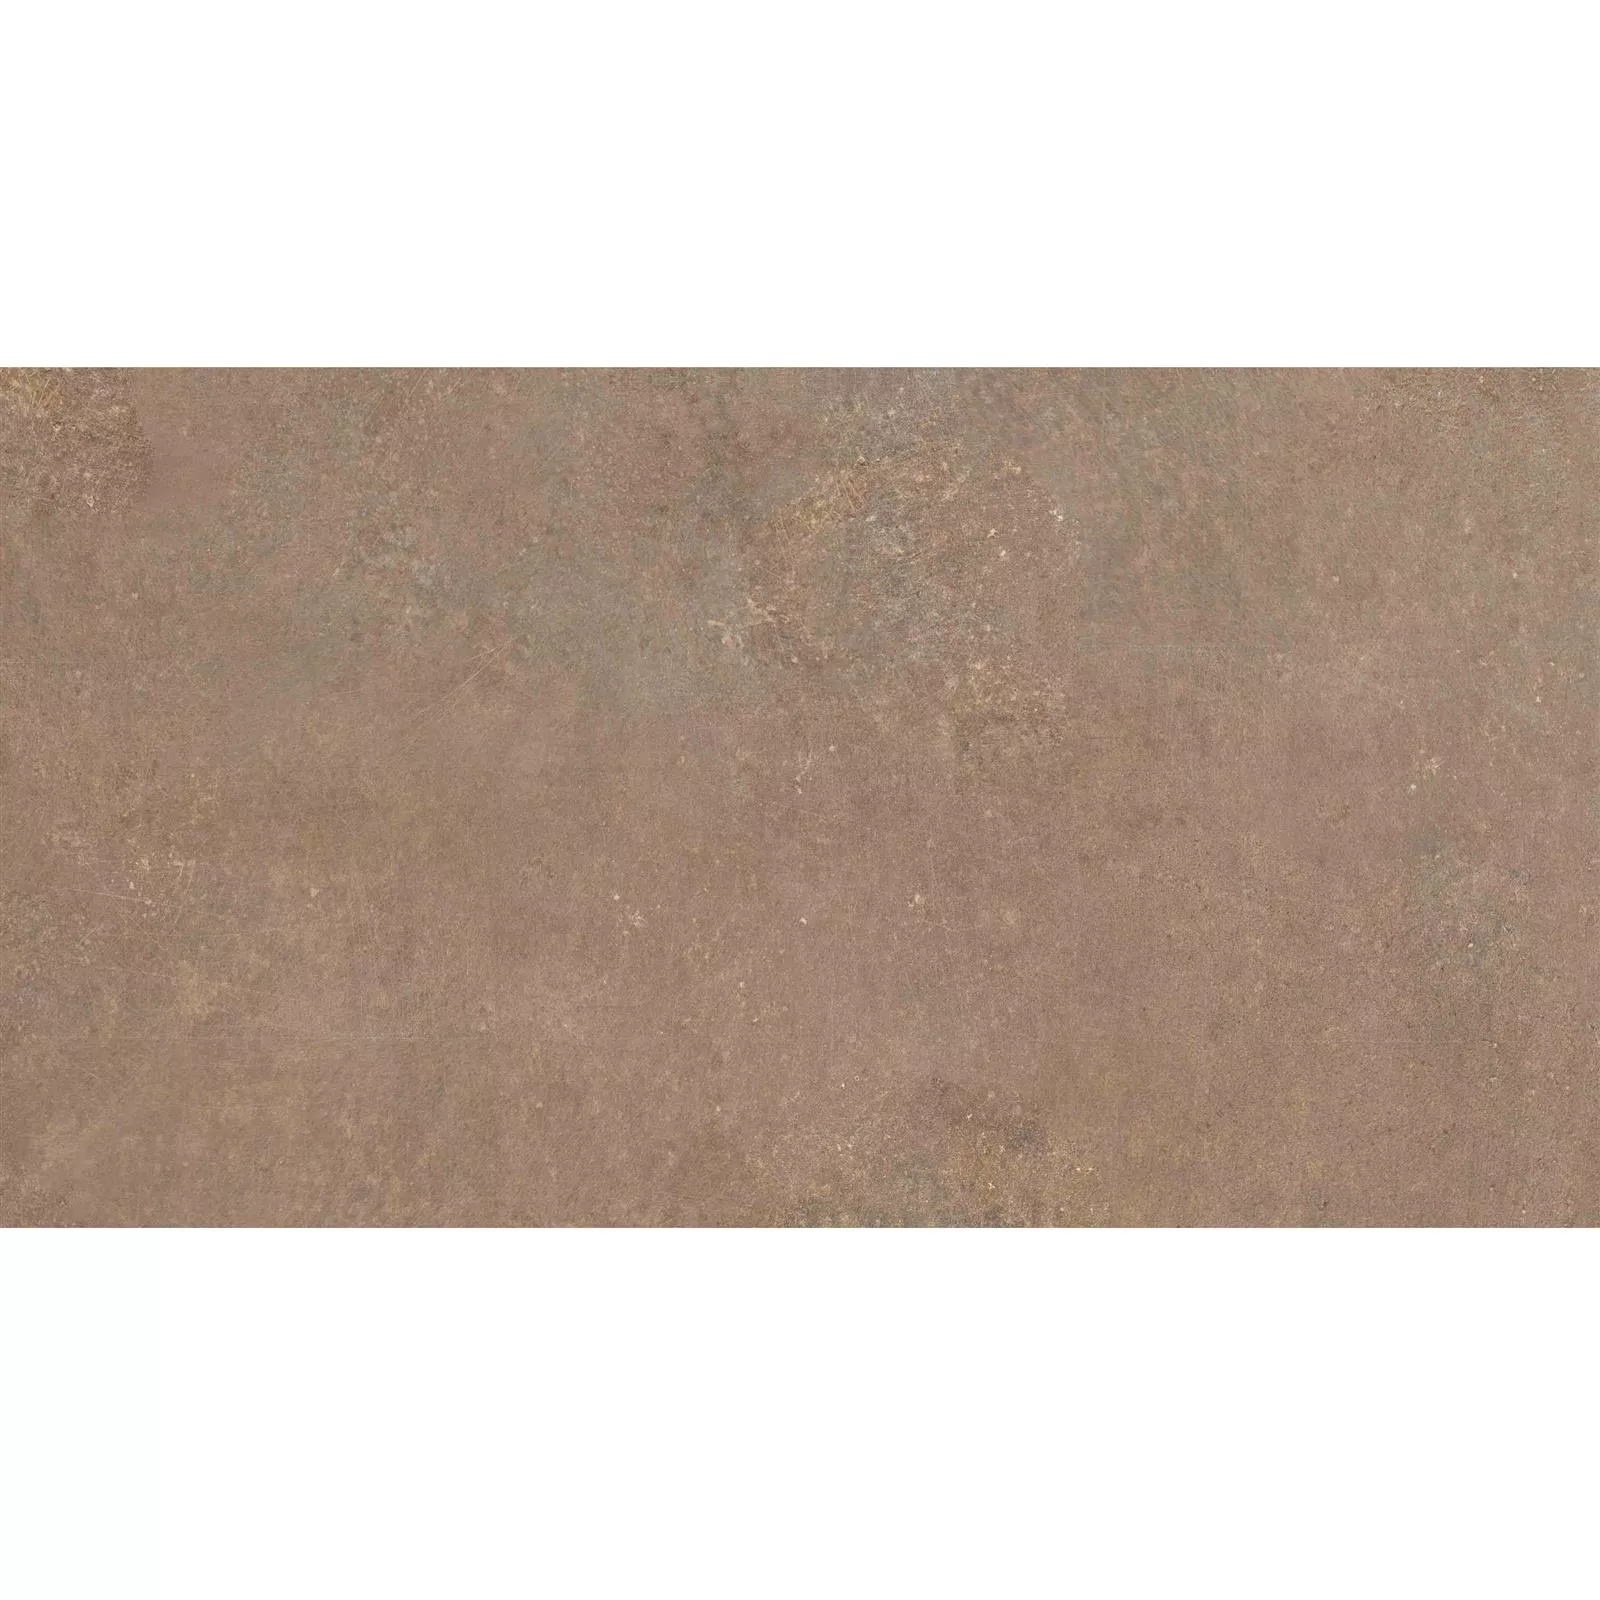 Floor Tiles Peaceway Brown 30x60cm